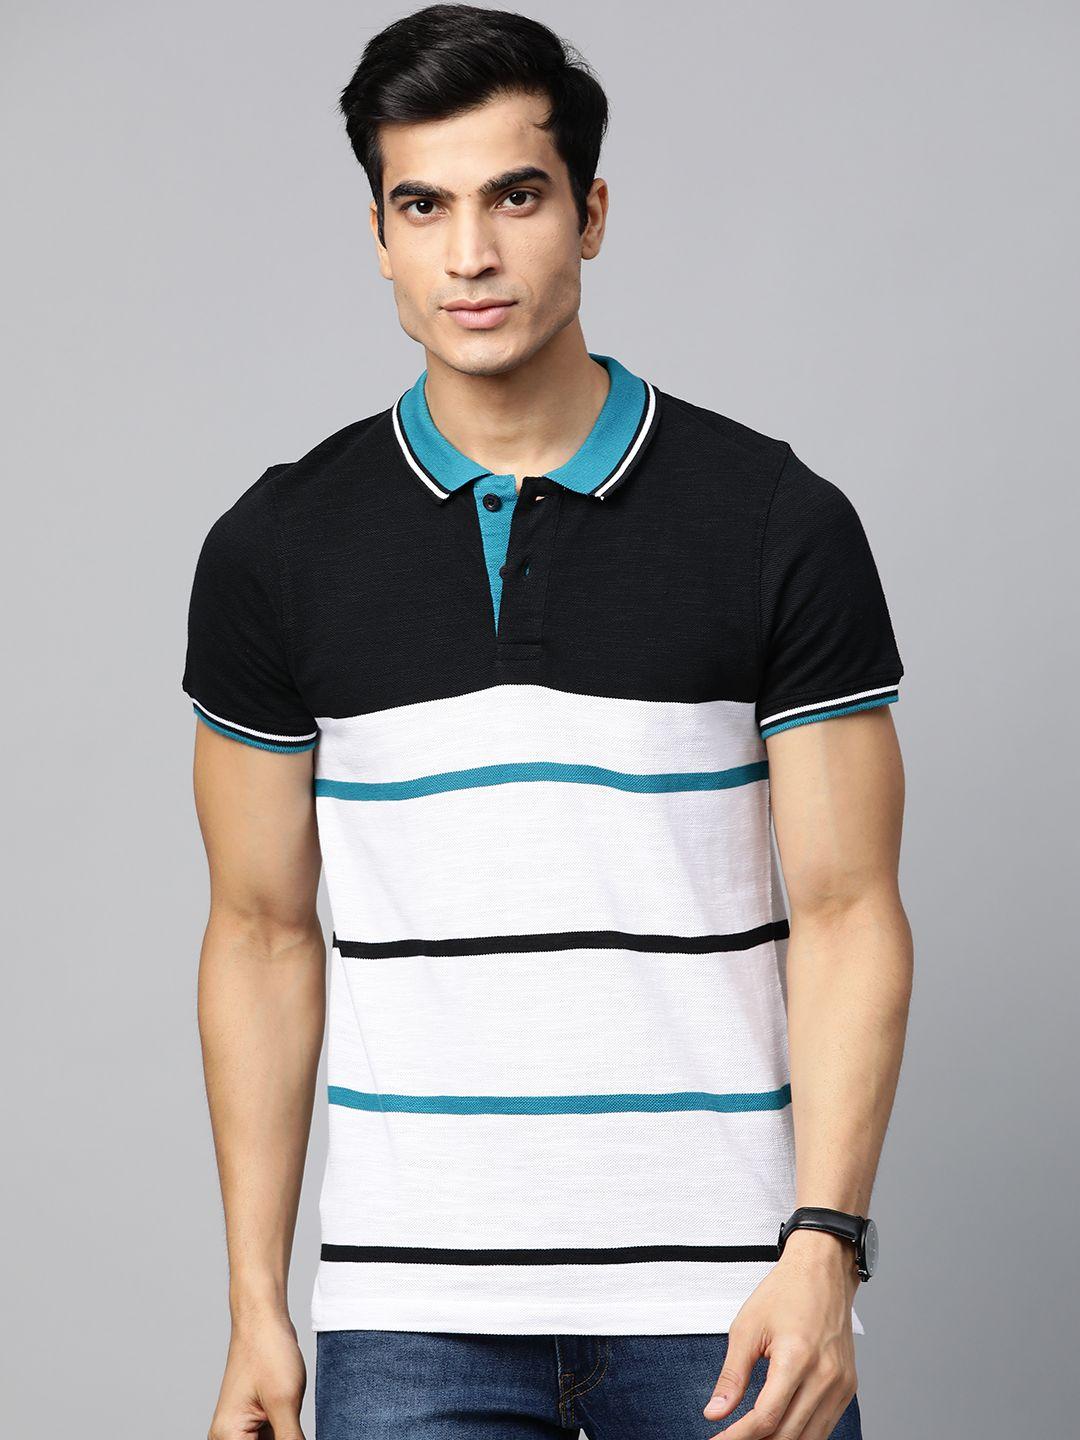 the roadster lifestyle co men white & black striped polo collar t-shirt